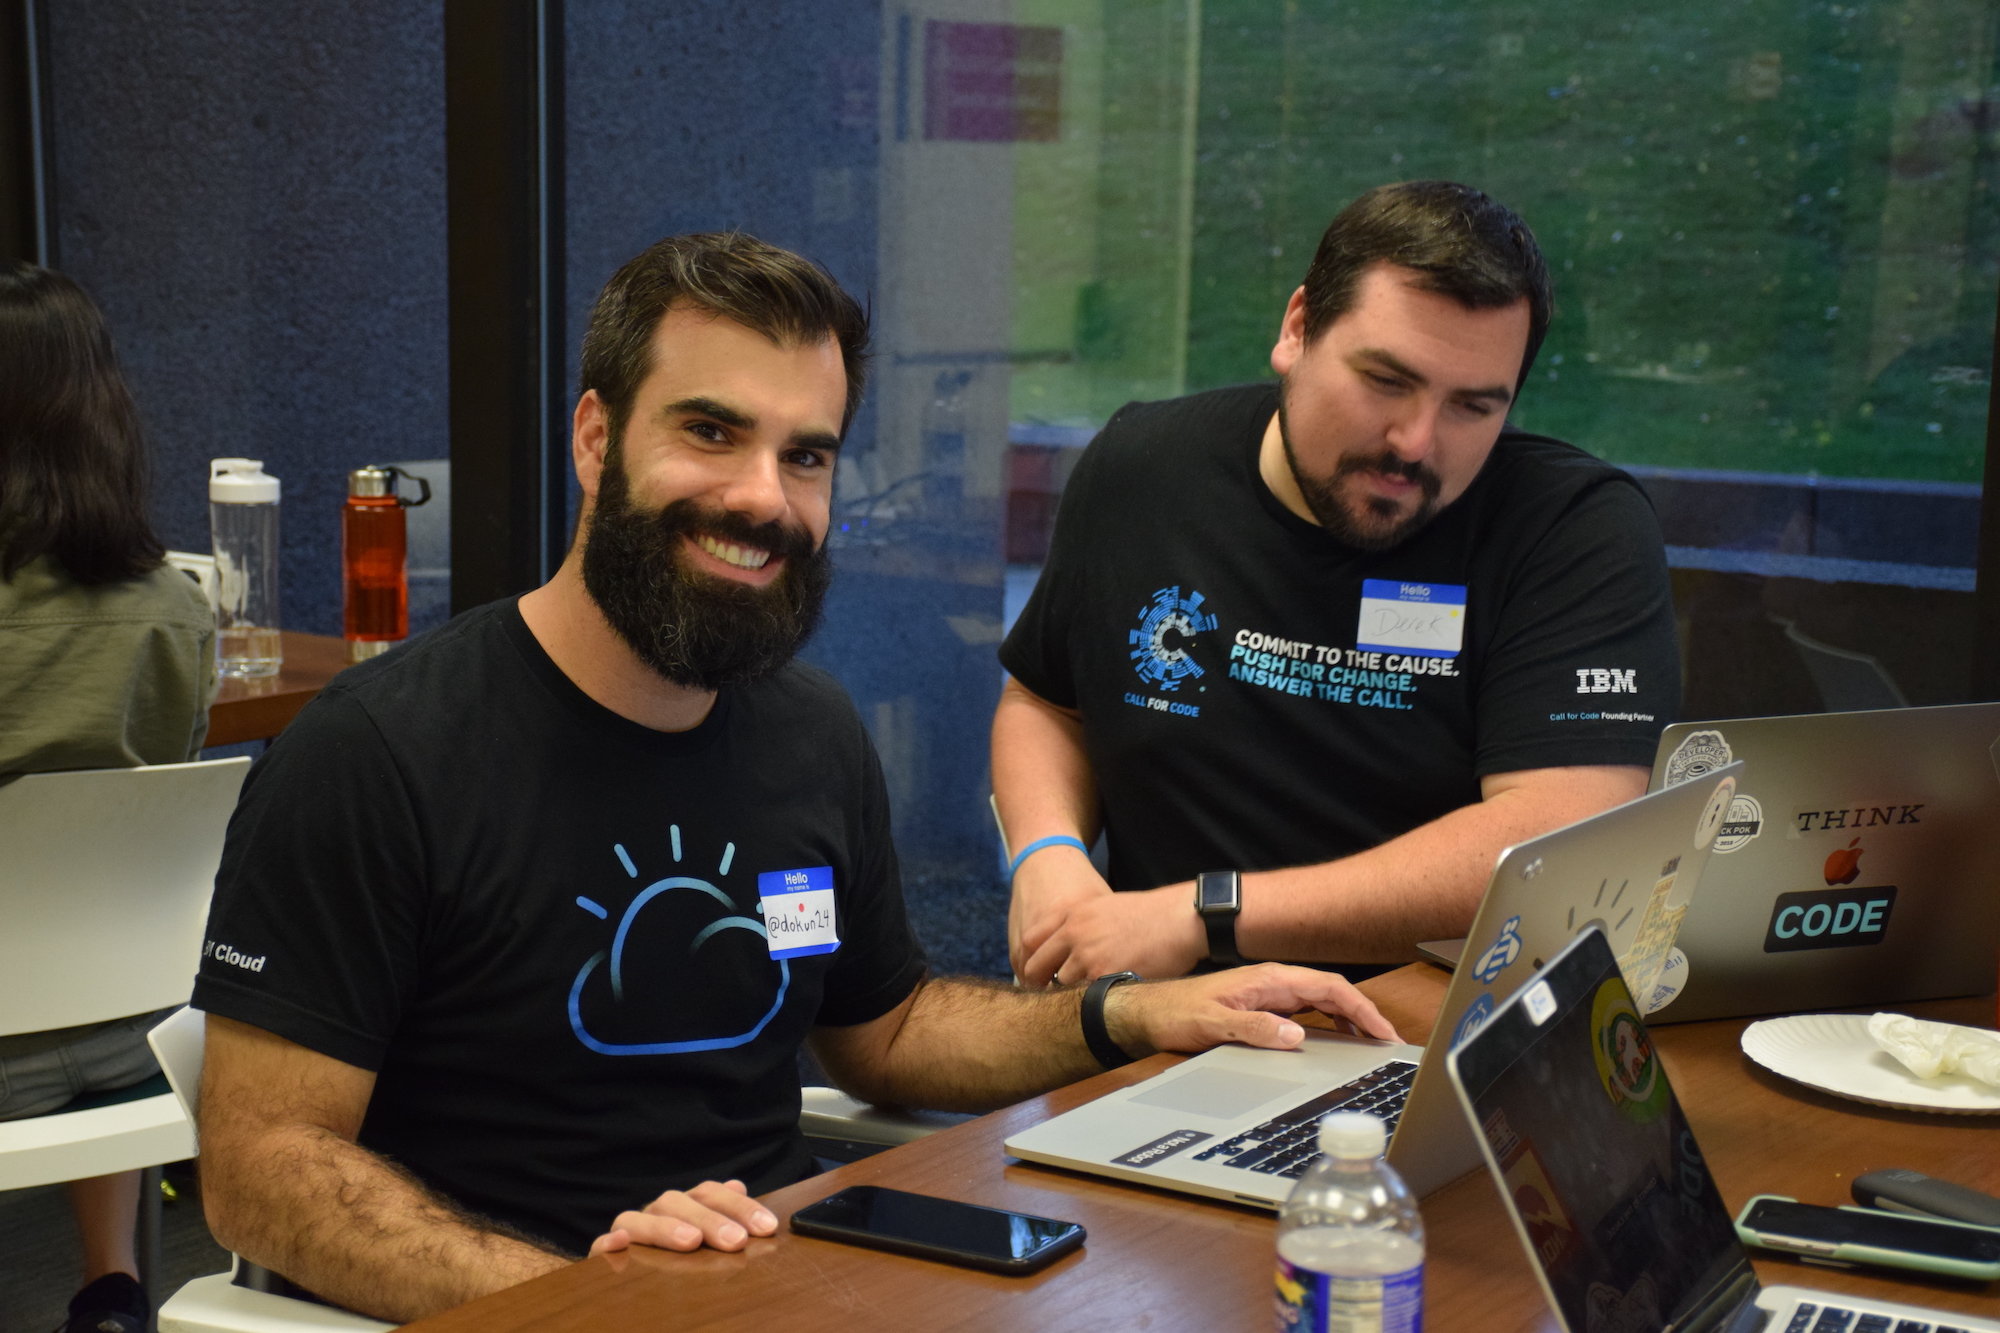 IBM Coders at a LaunchPad hackathon